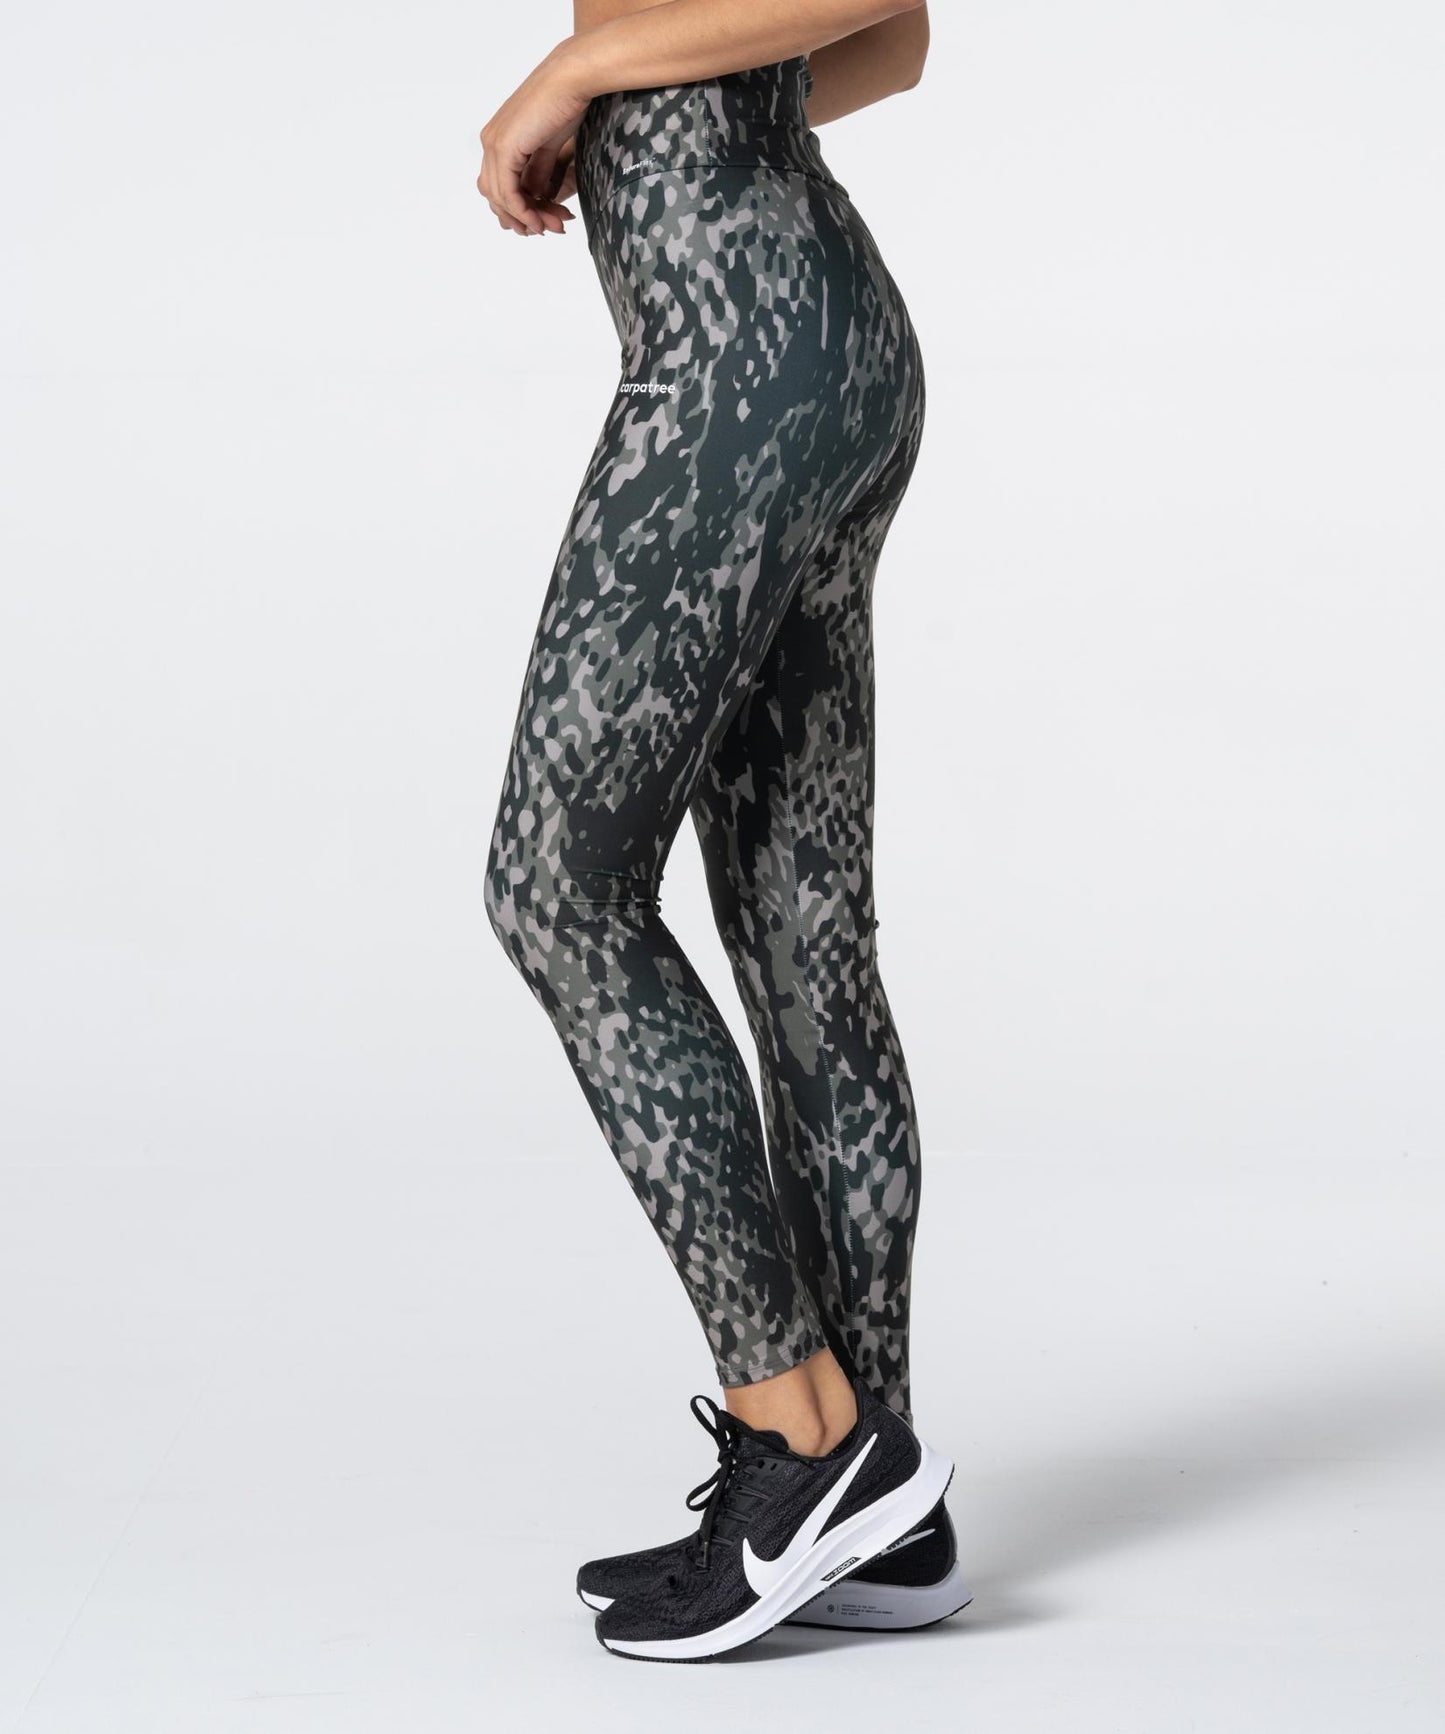 Carpatree high waisted printed leggings in grey snake skin pattern